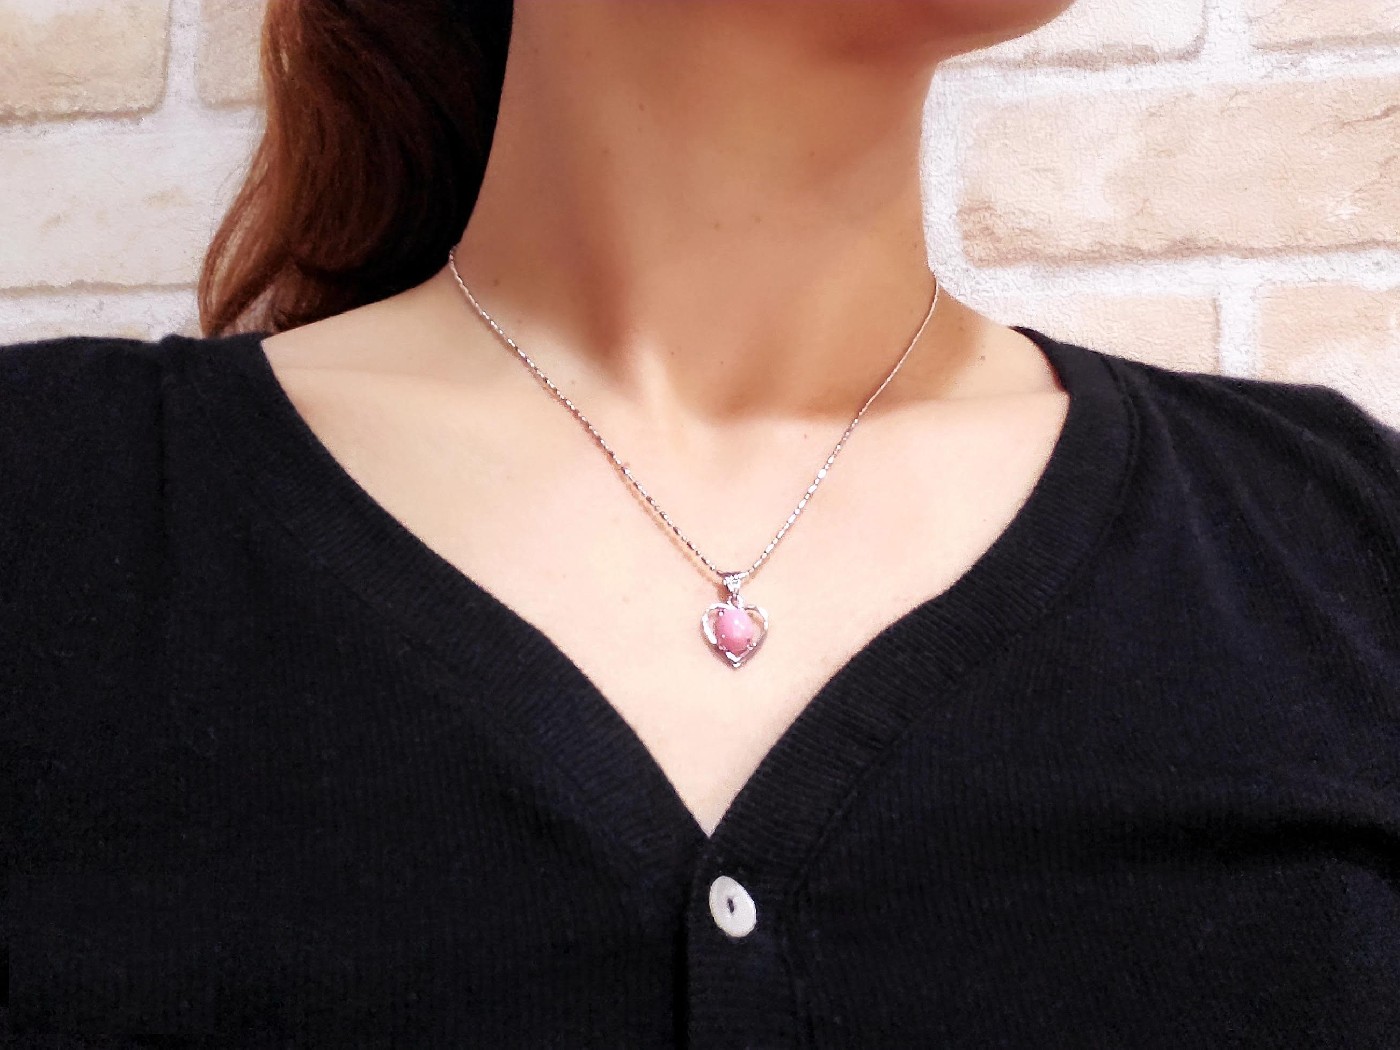 Exquisite Taiwan Rose Stone Pendant Necklace